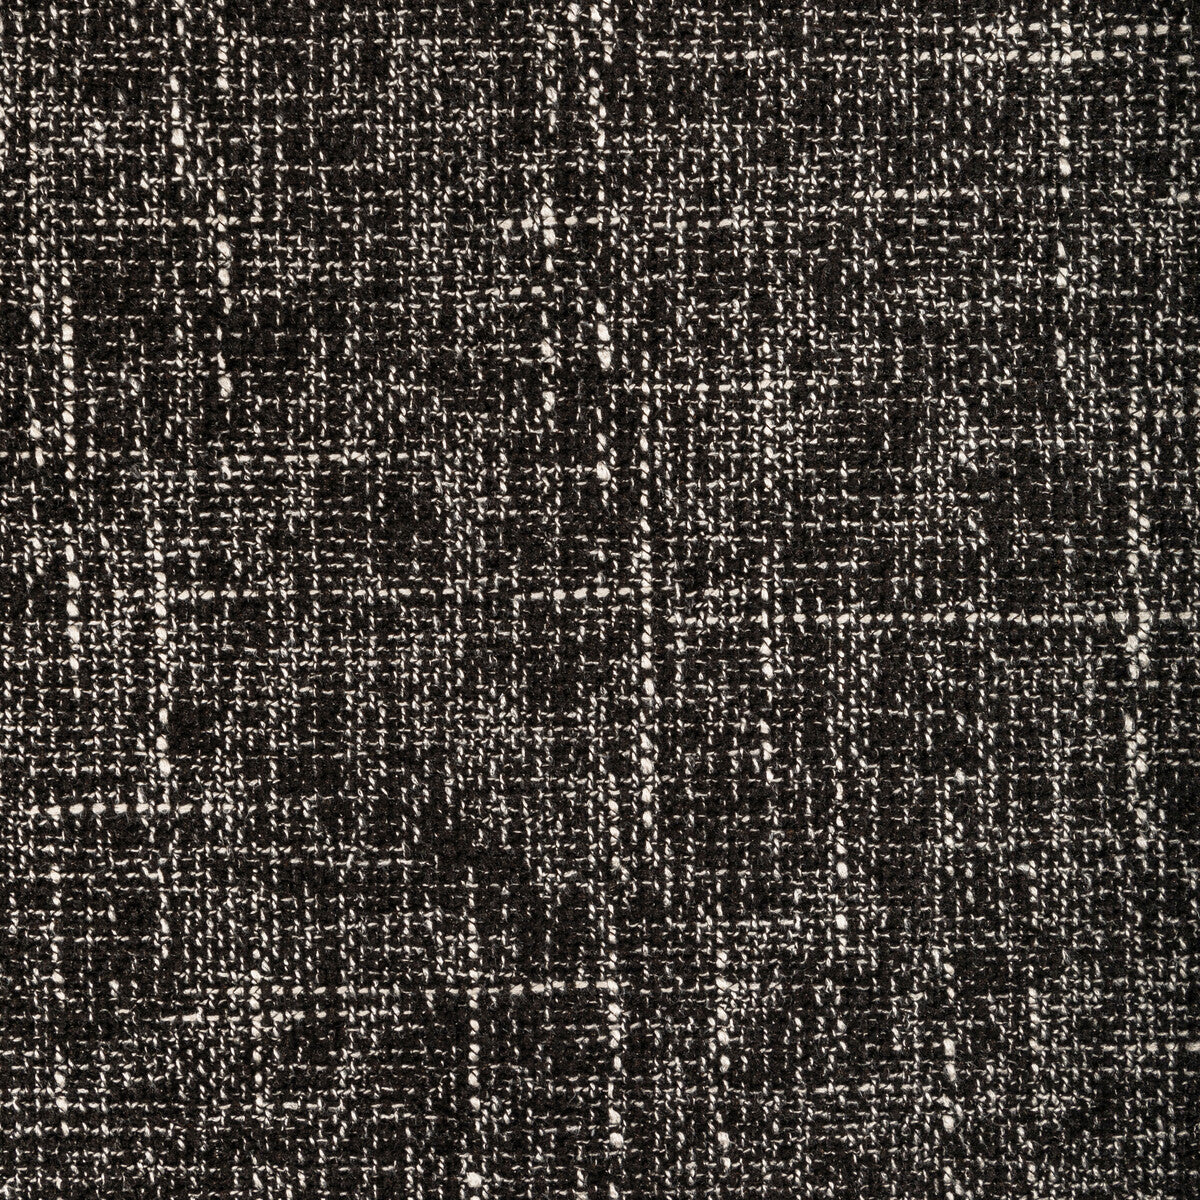 Kravet Smart fabric in 36579-816 color - pattern 36579.816.0 - by Kravet Smart in the Performance Kravetarmor collection